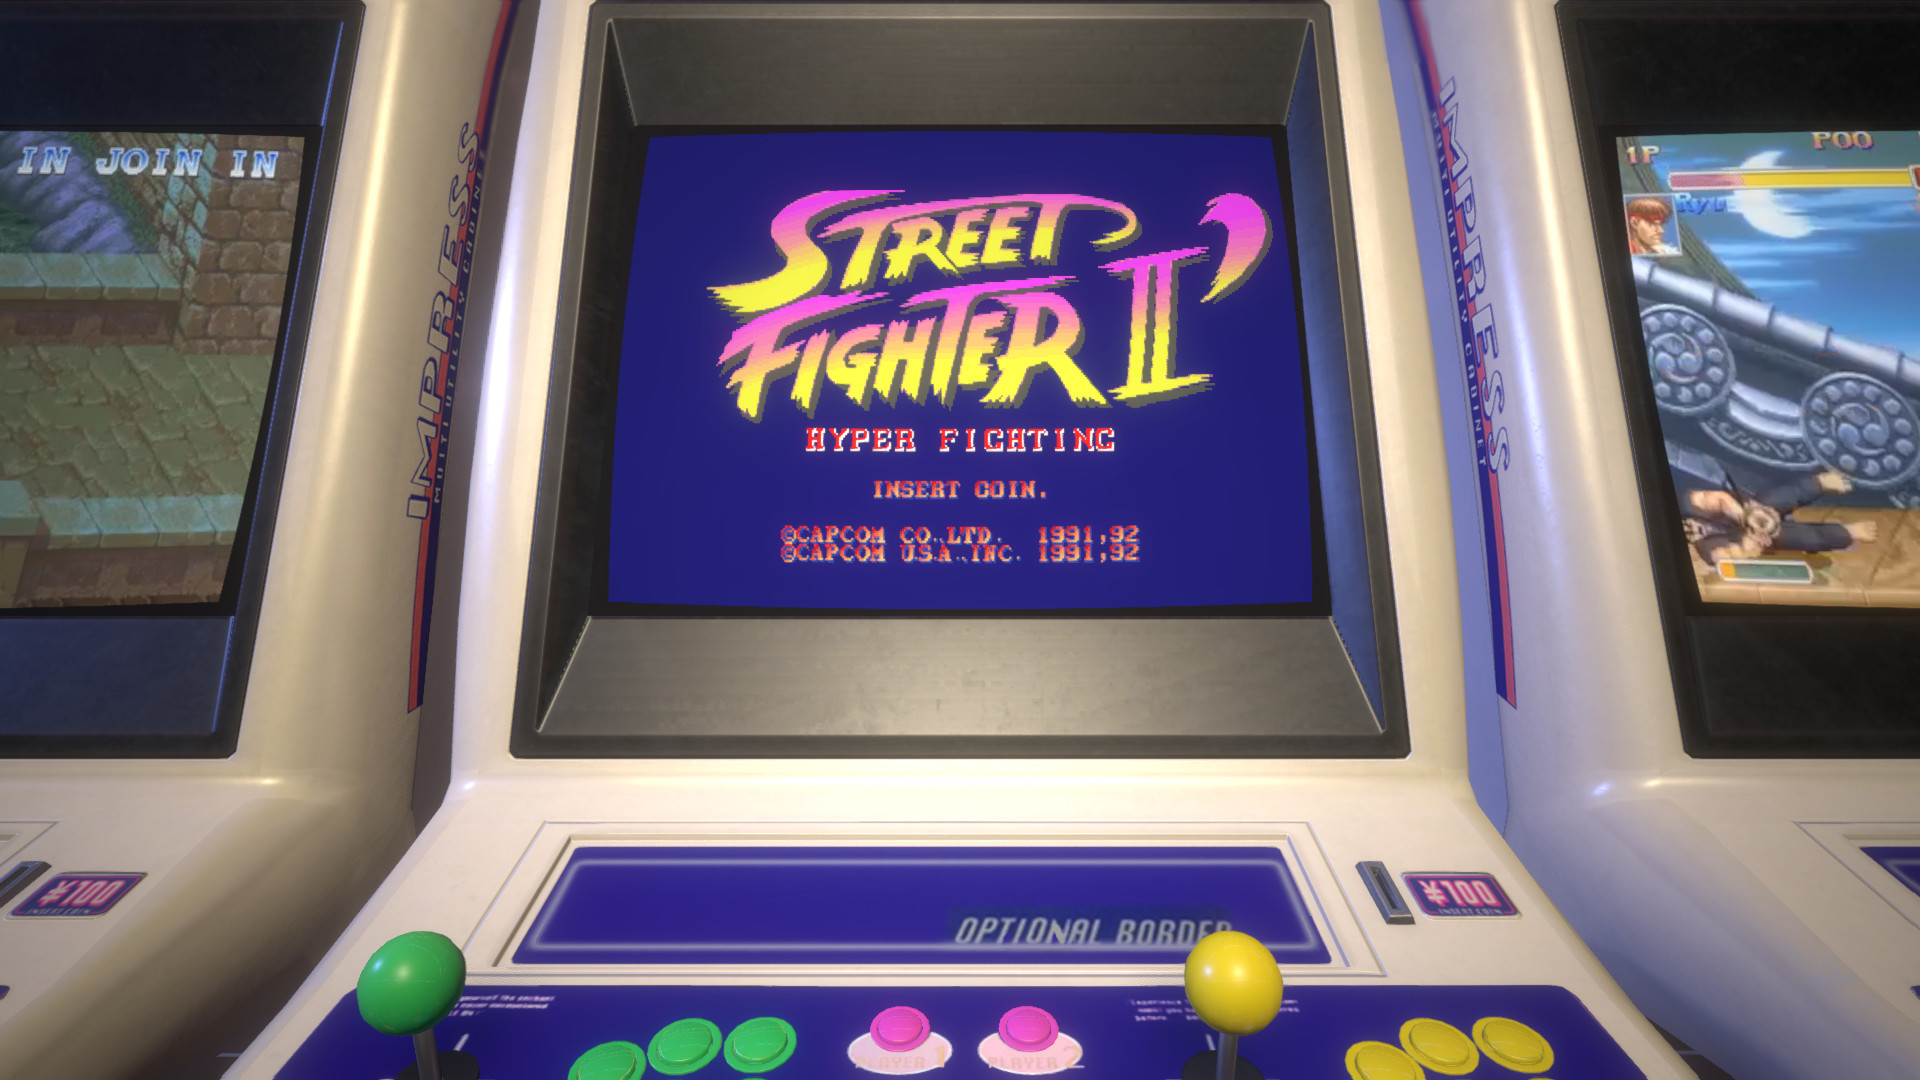 Street Fighter II - Zangief (Arcade / 1991) 4K 60FPS 